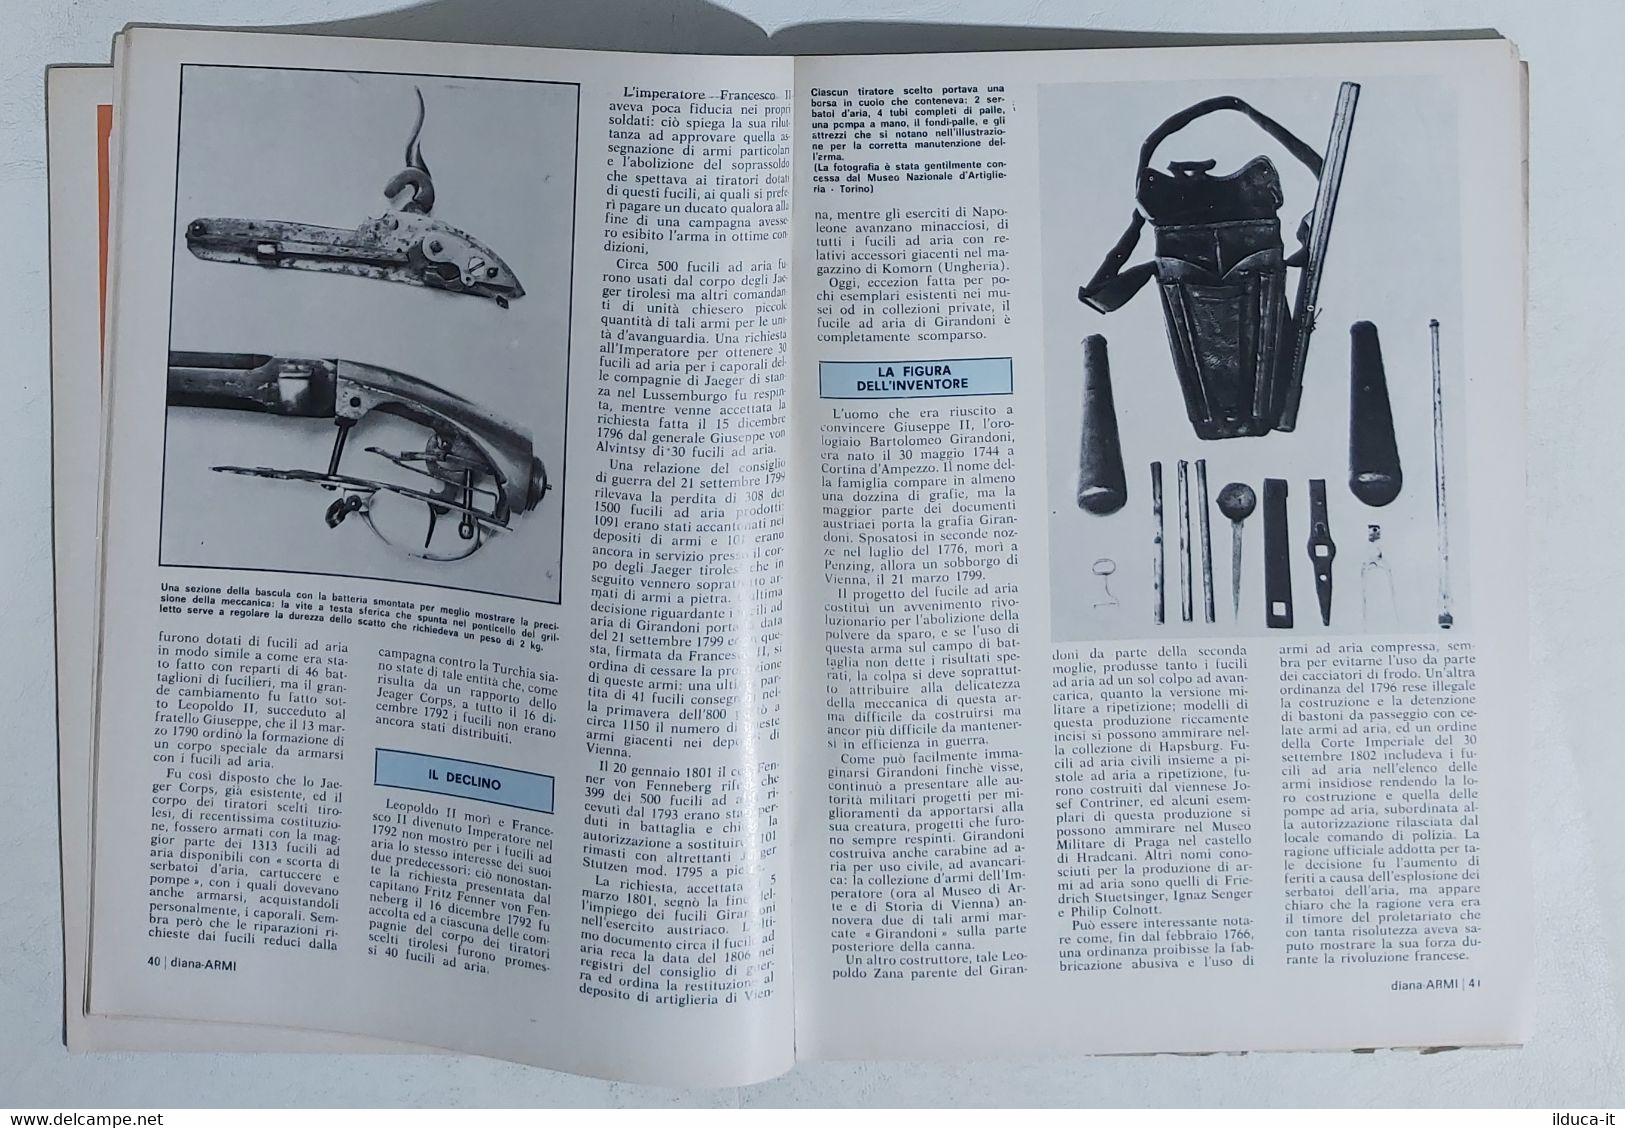 14207 DIANA ARMI A. II N. 6 - Automatico Beretta Mod. 300 - Ed. Olimpia 1968 - Testi Scientifici